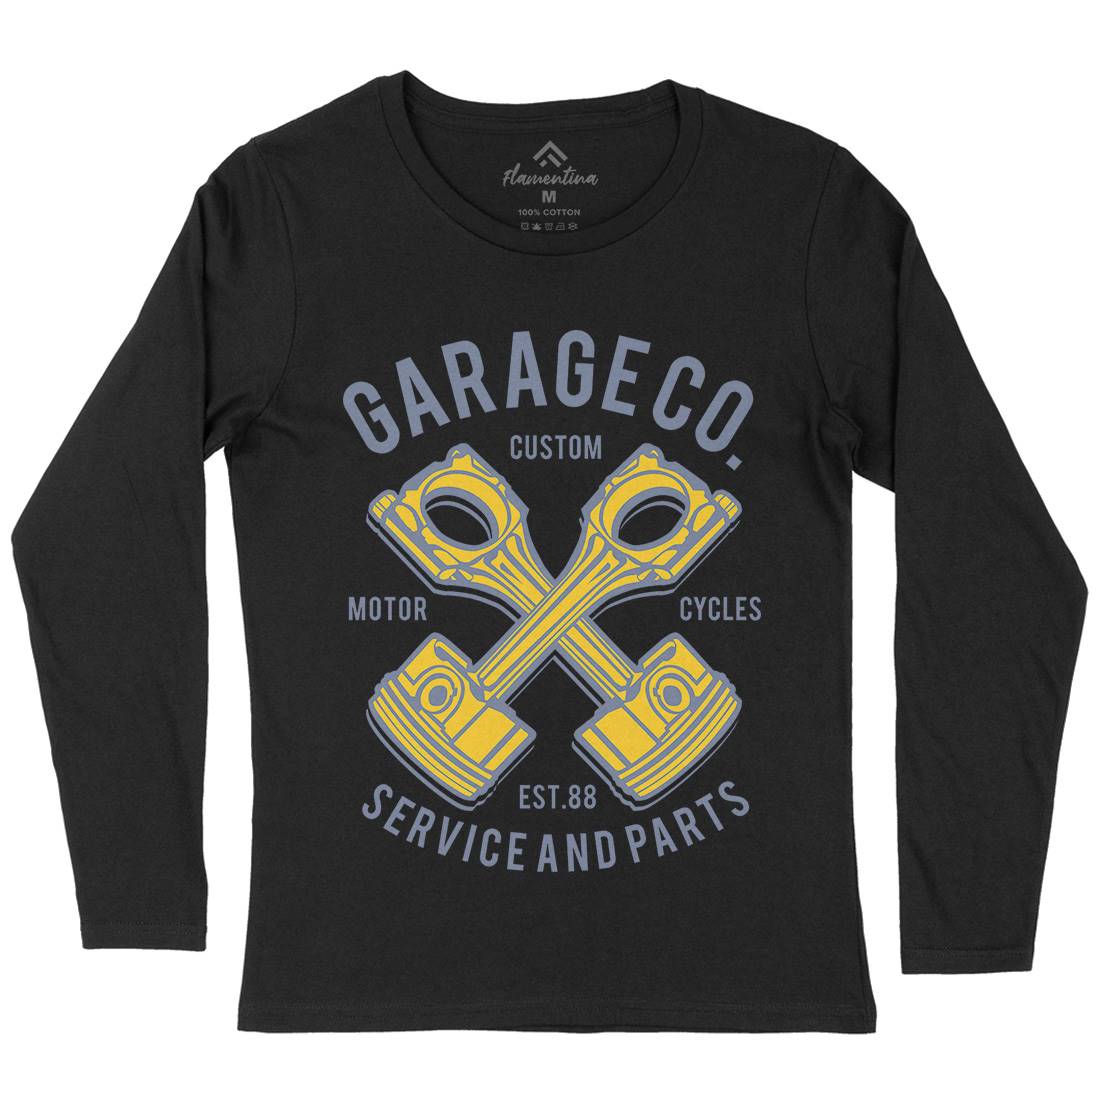 Garage Co Womens Long Sleeve T-Shirt Cars B216